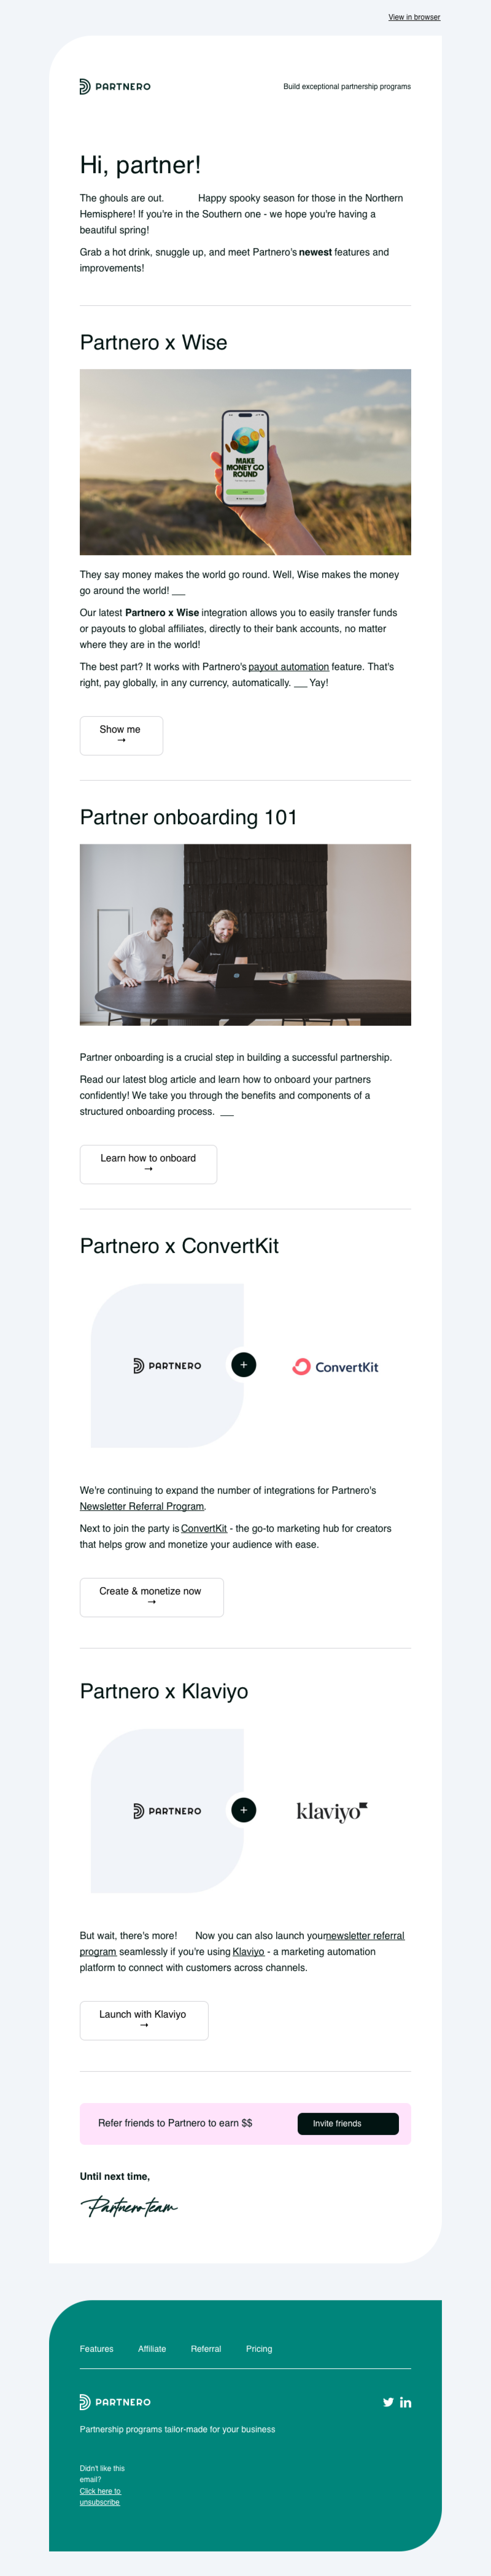 Partnero example - Made with MailerLite